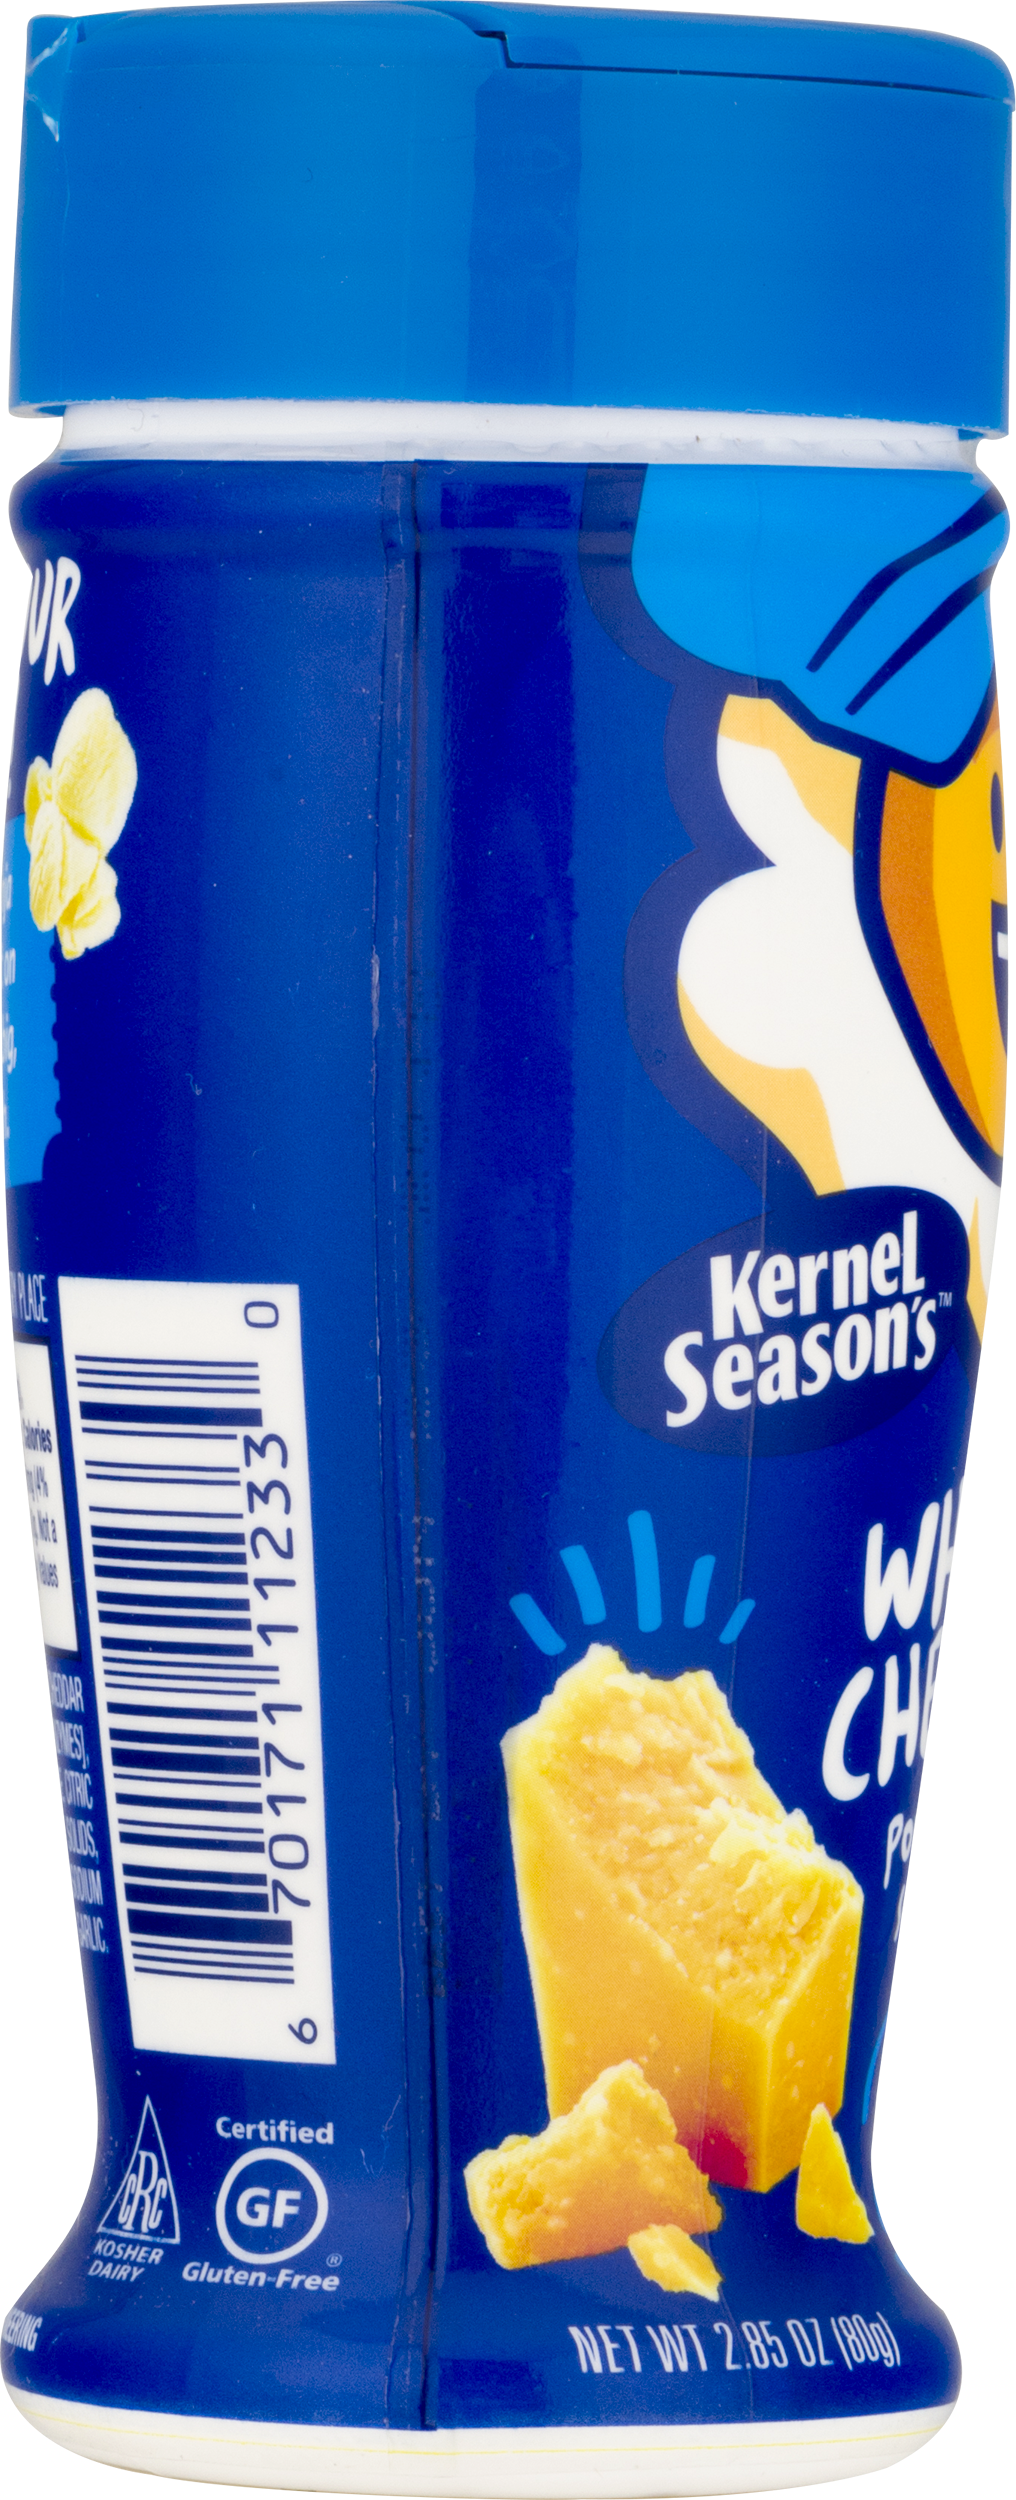 Kernel Season's White Cheddar Popcorn Seasoning, 2.85 oz - image 4 of 14